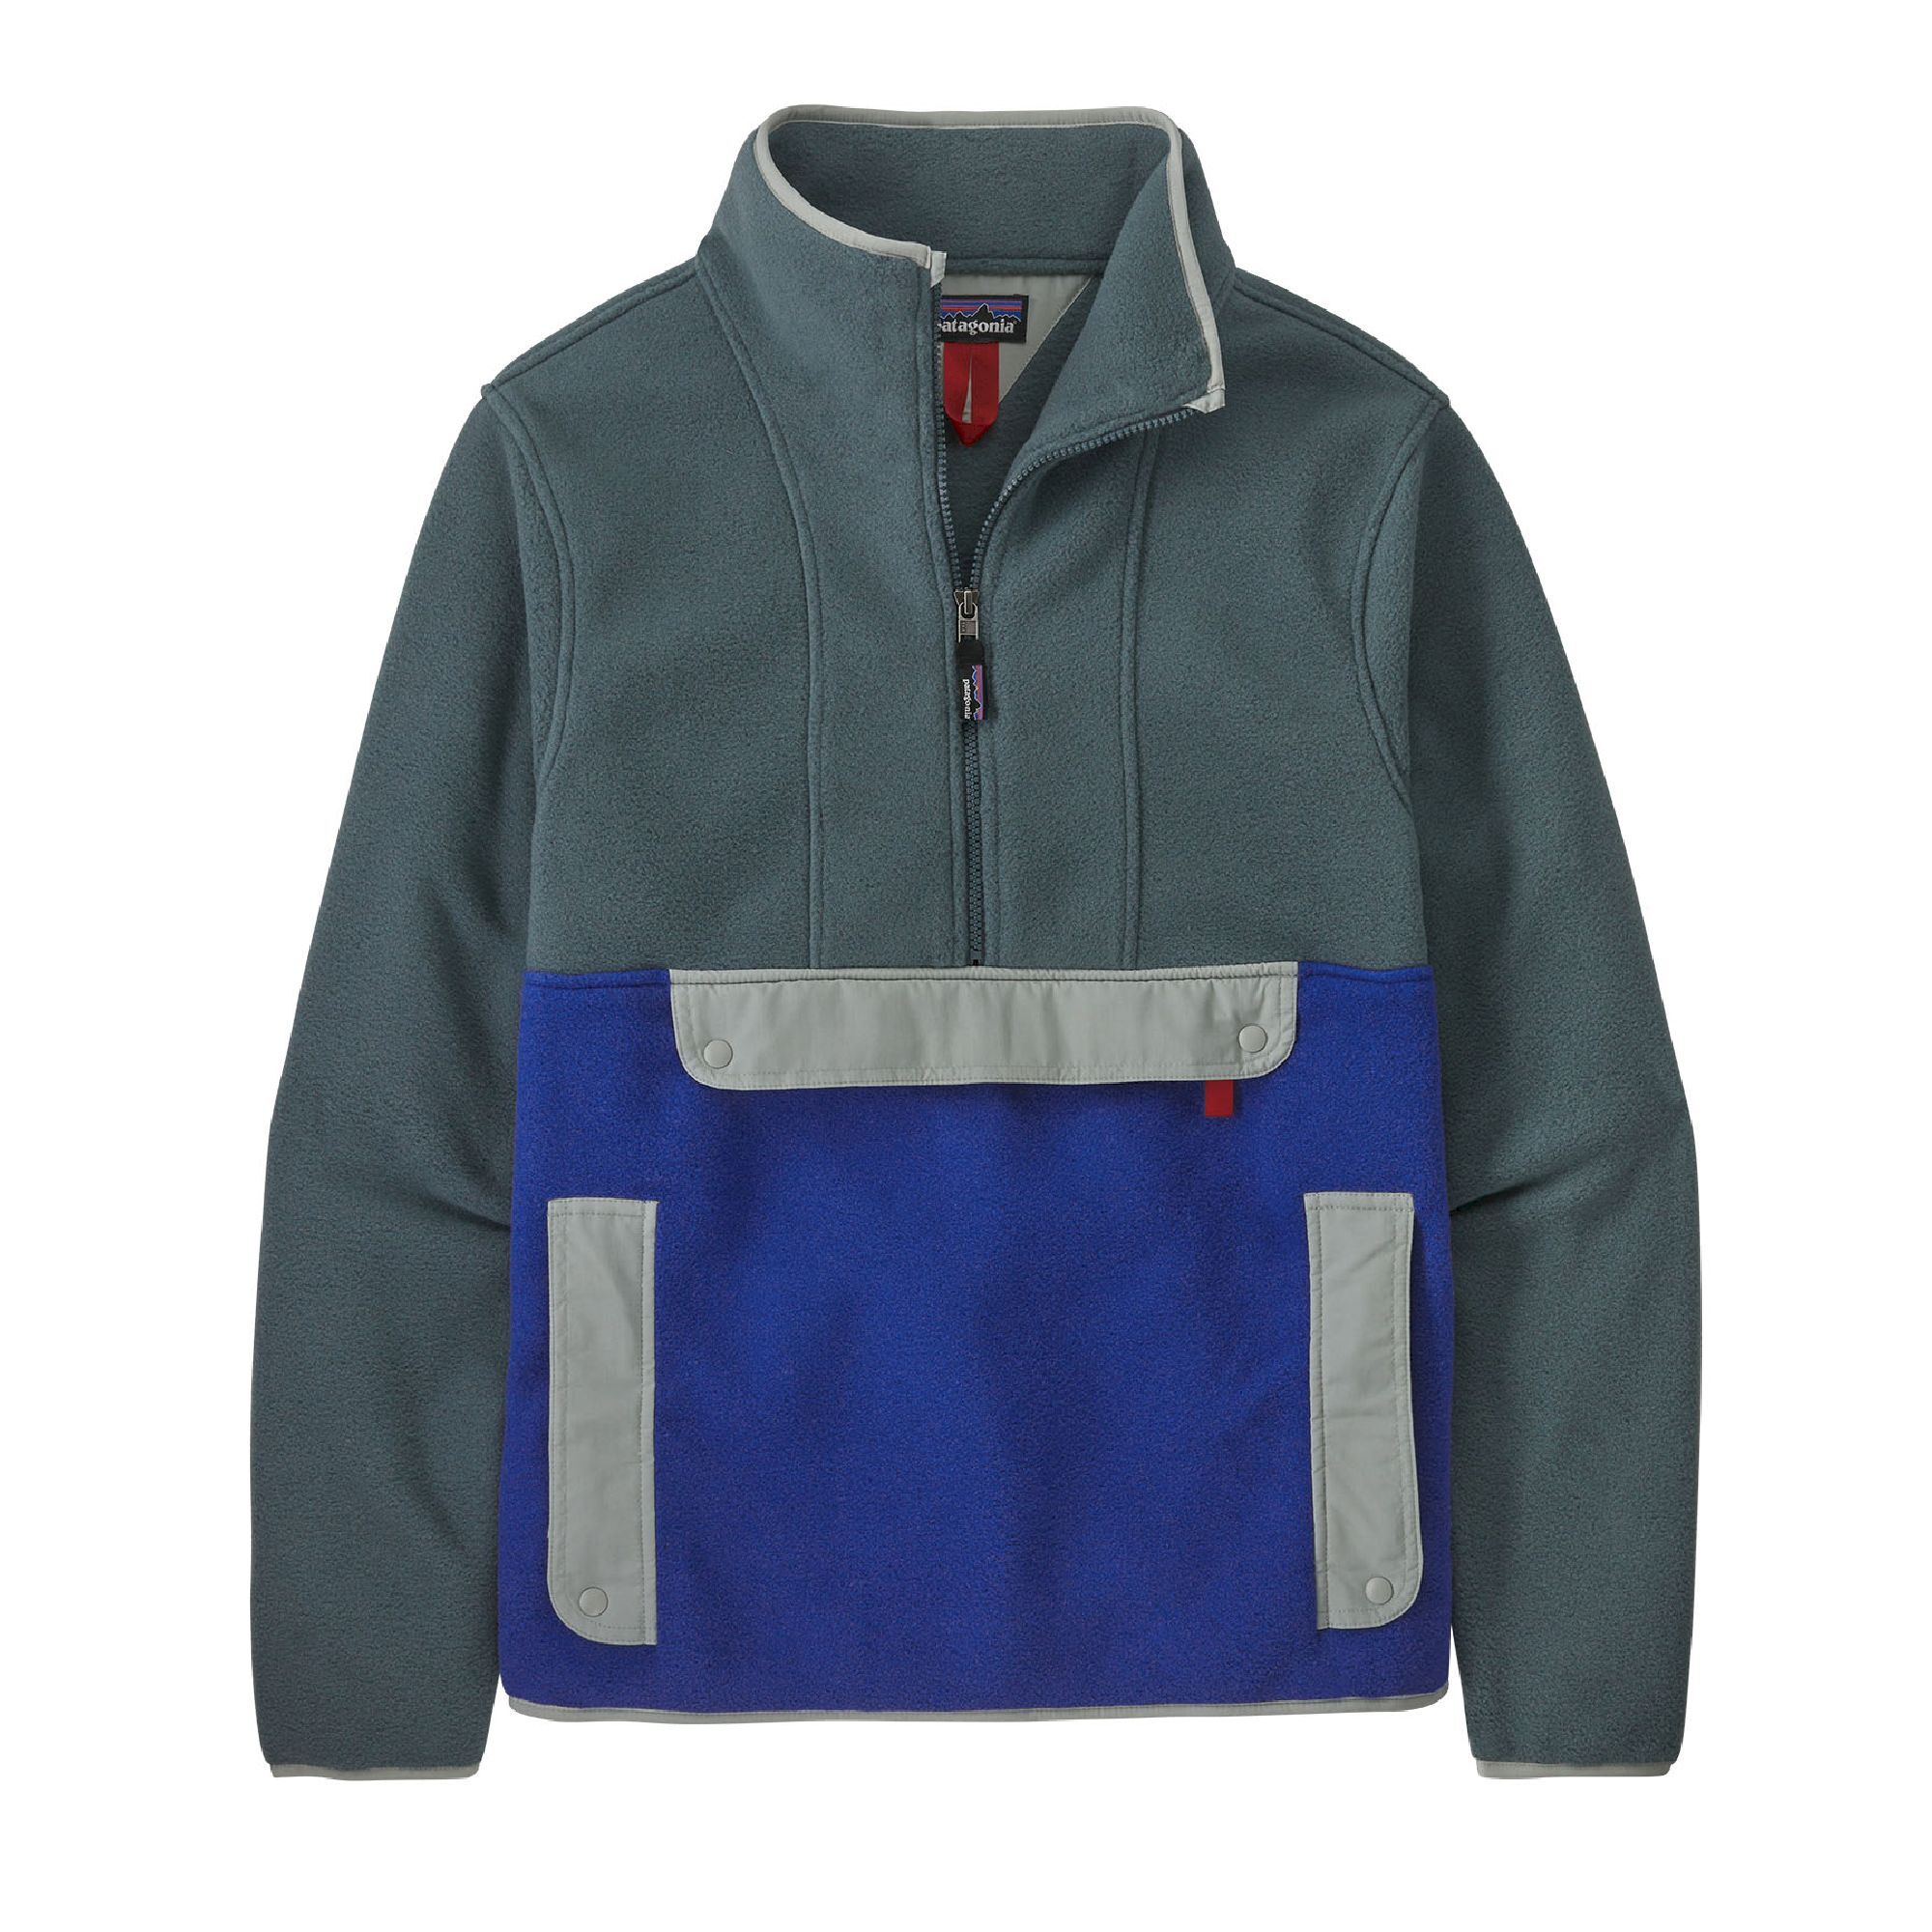 Patagonia Synchilla Anorak - Fleece jacket